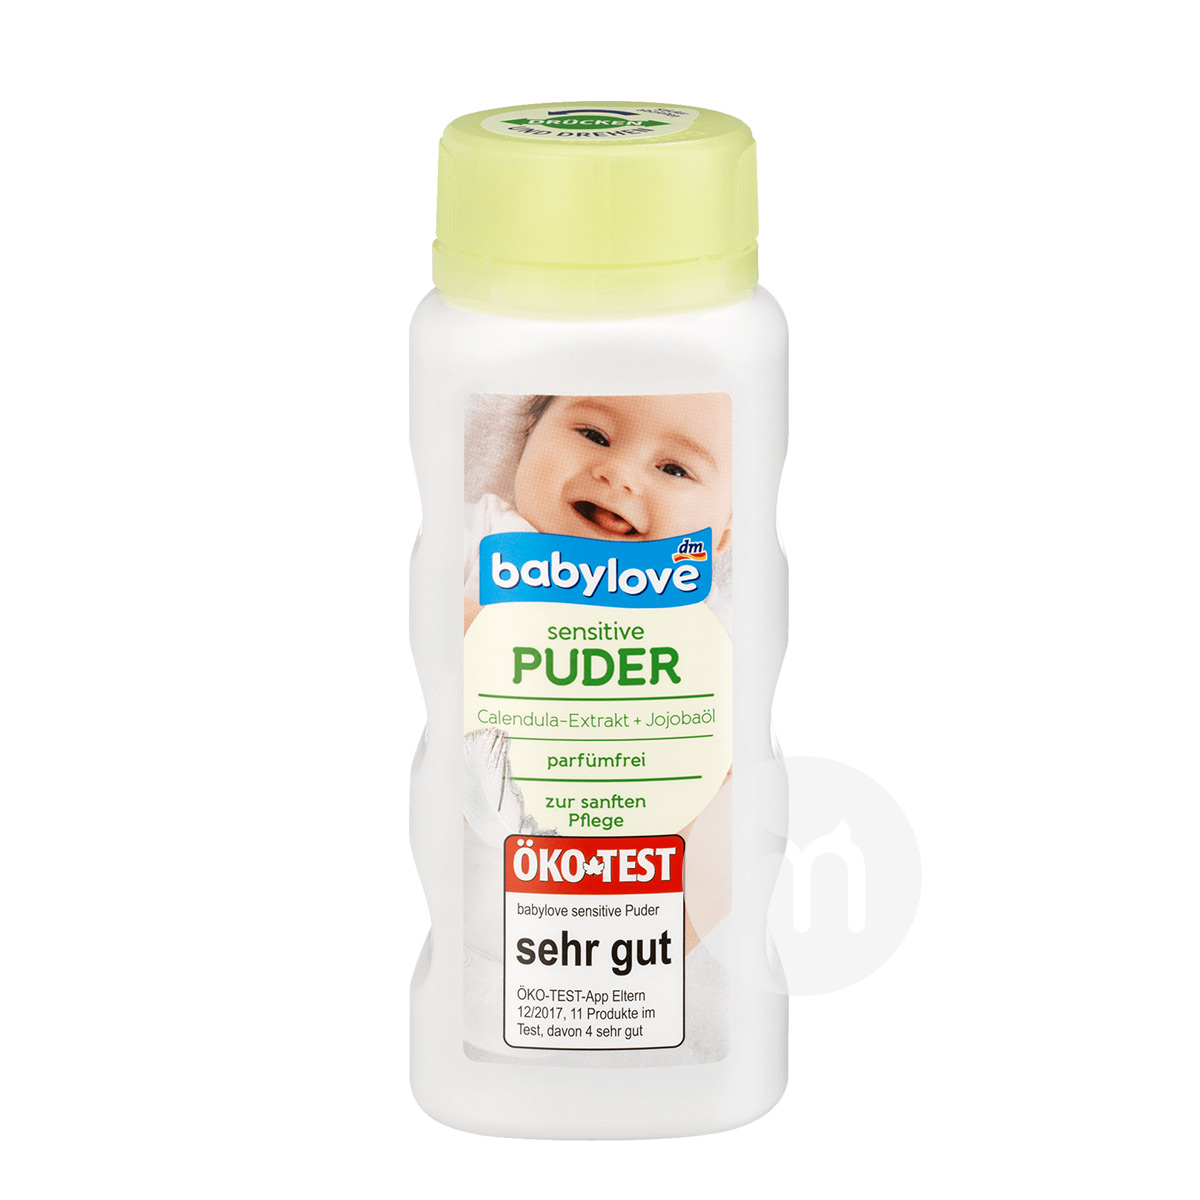 Babyloveドイツの宝物は赤ちゃんの柔らかい肌のさわやかな粉を愛し...